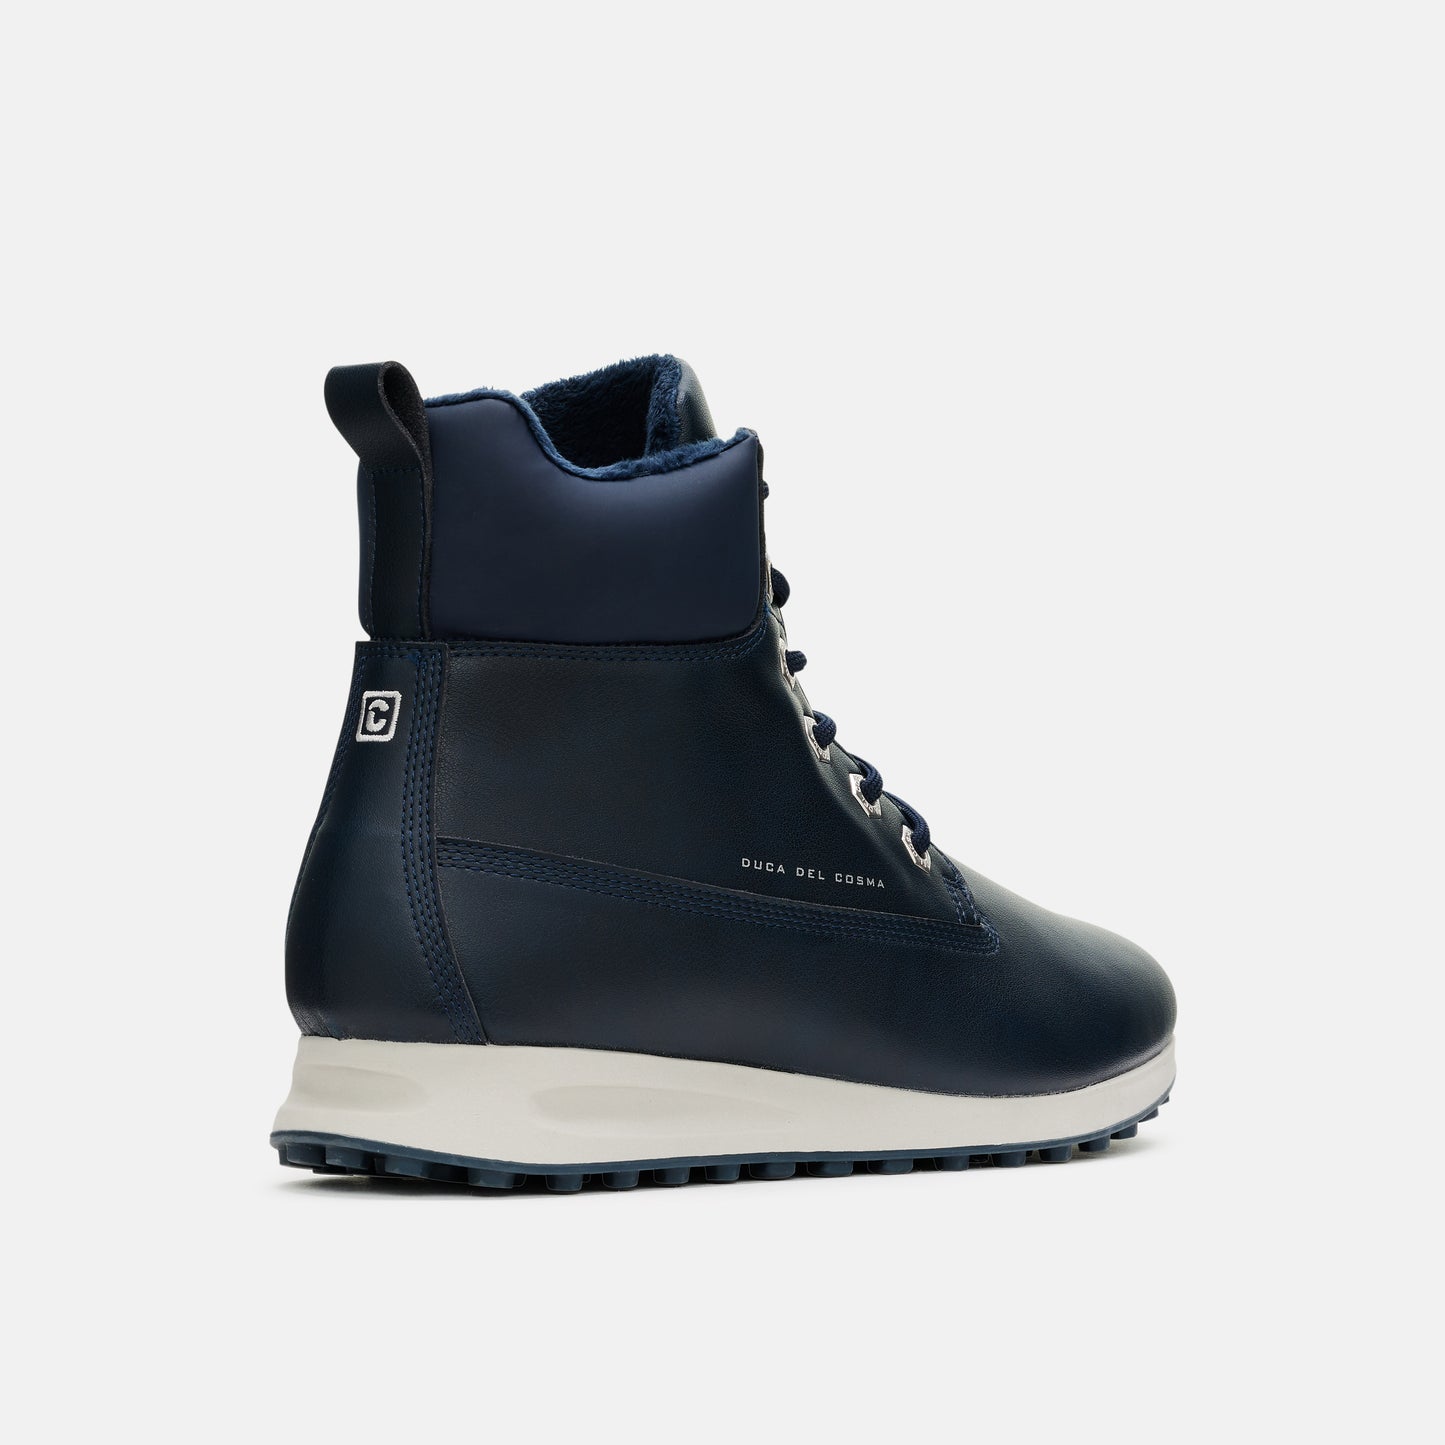 Fontana blue waterproof golf boots for men's perfect for winter season golf